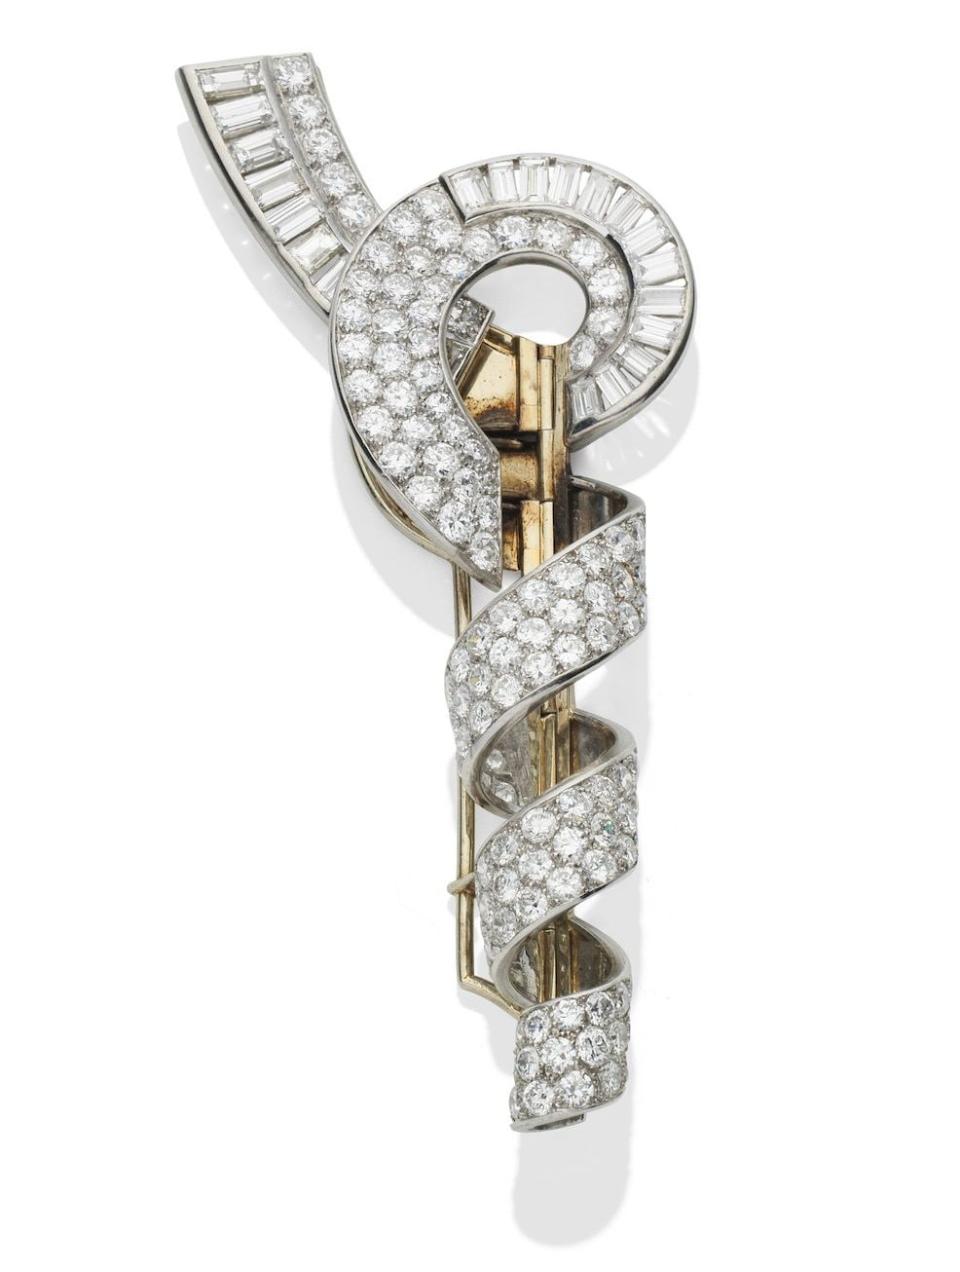 Joan Collins' 1930s Van Cleef & Arpels diamond brooch